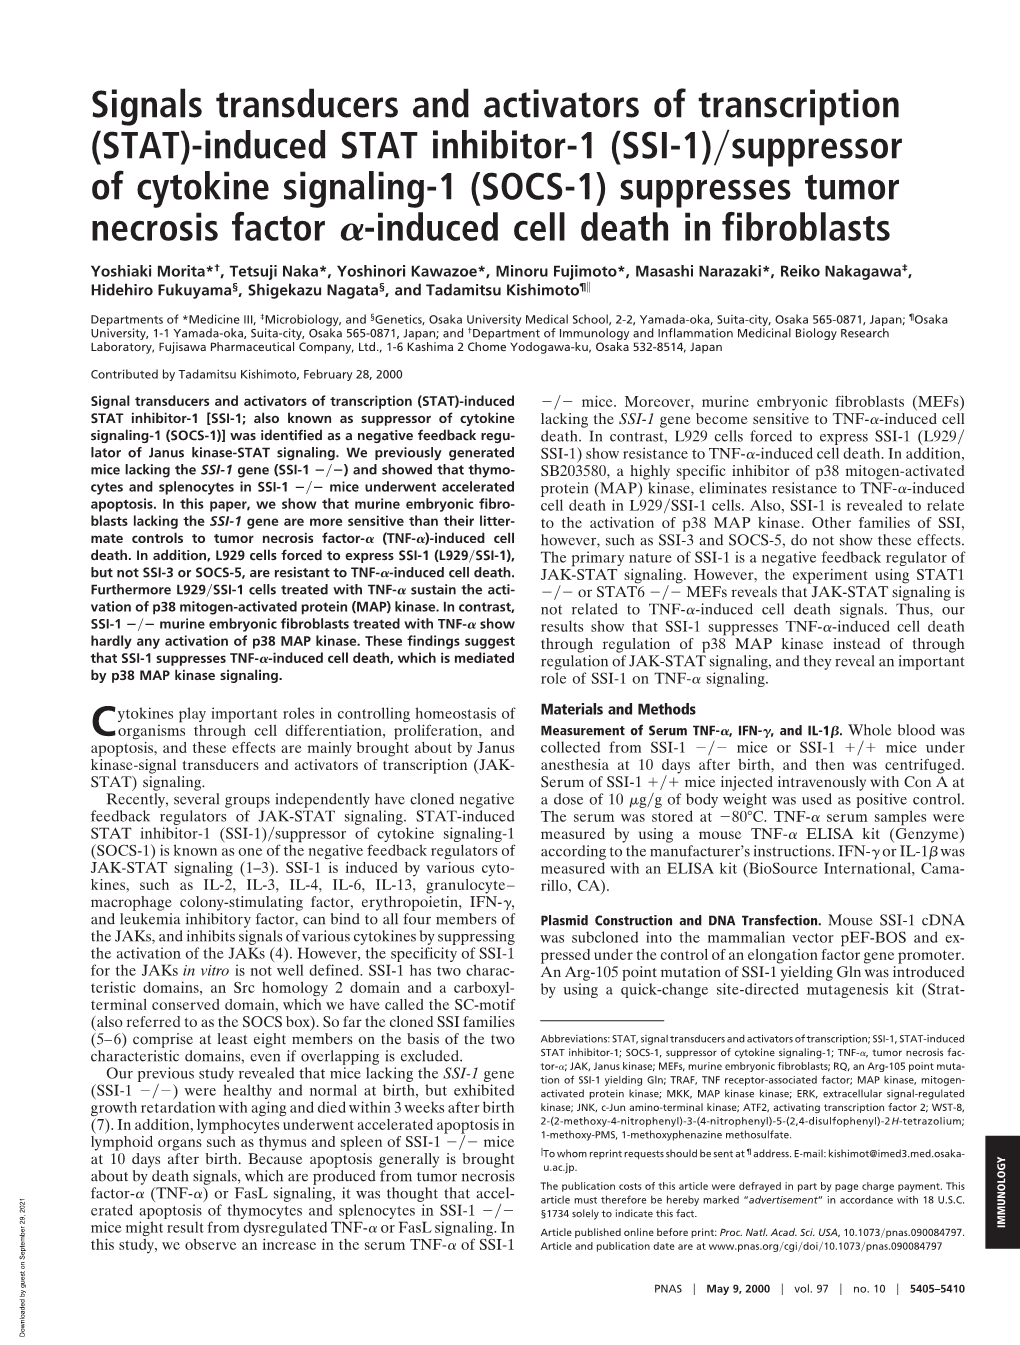 Suppressor of Cytokine Signaling-1 (SOCS-1) Suppresses Tumor Necrosis Factor ␣-Induced Cell Death in Fibroblasts